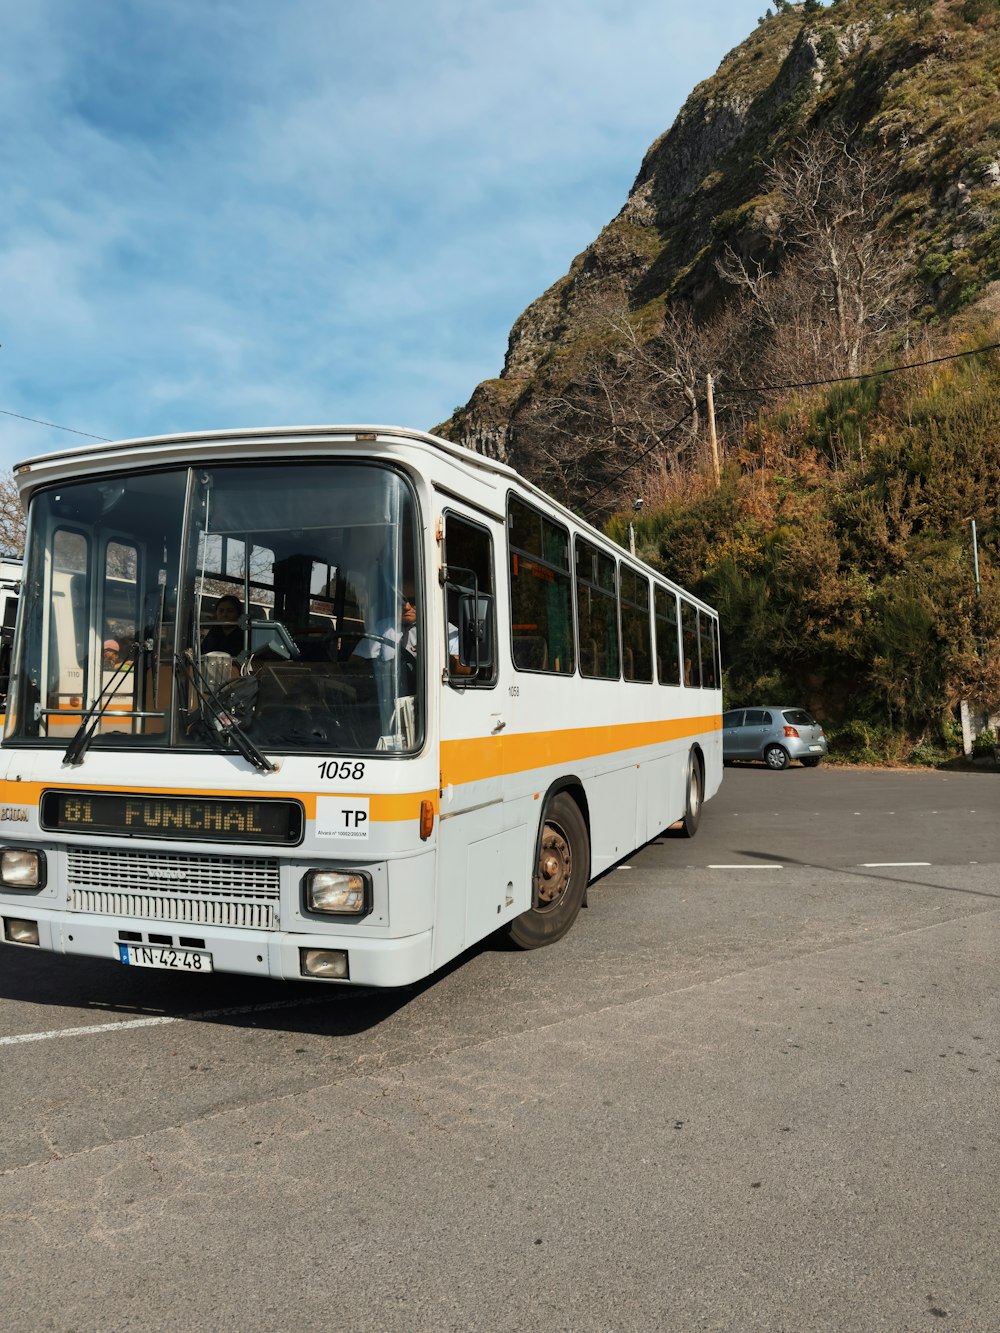 un autobus parcheggiato in un parcheggio vicino a una montagna